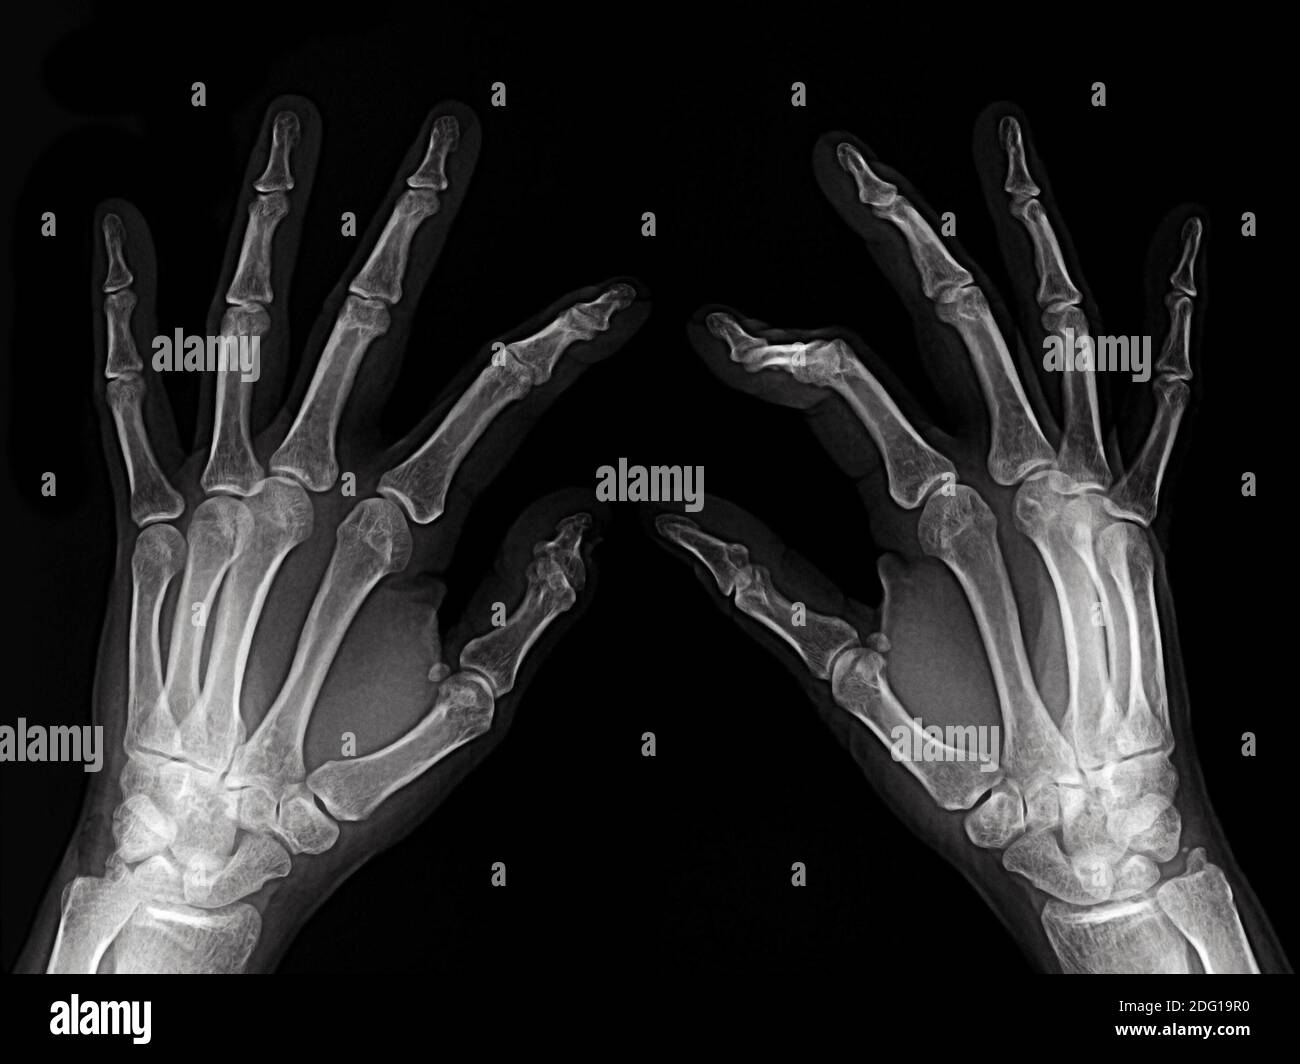 X-rayed hands Stock Photo